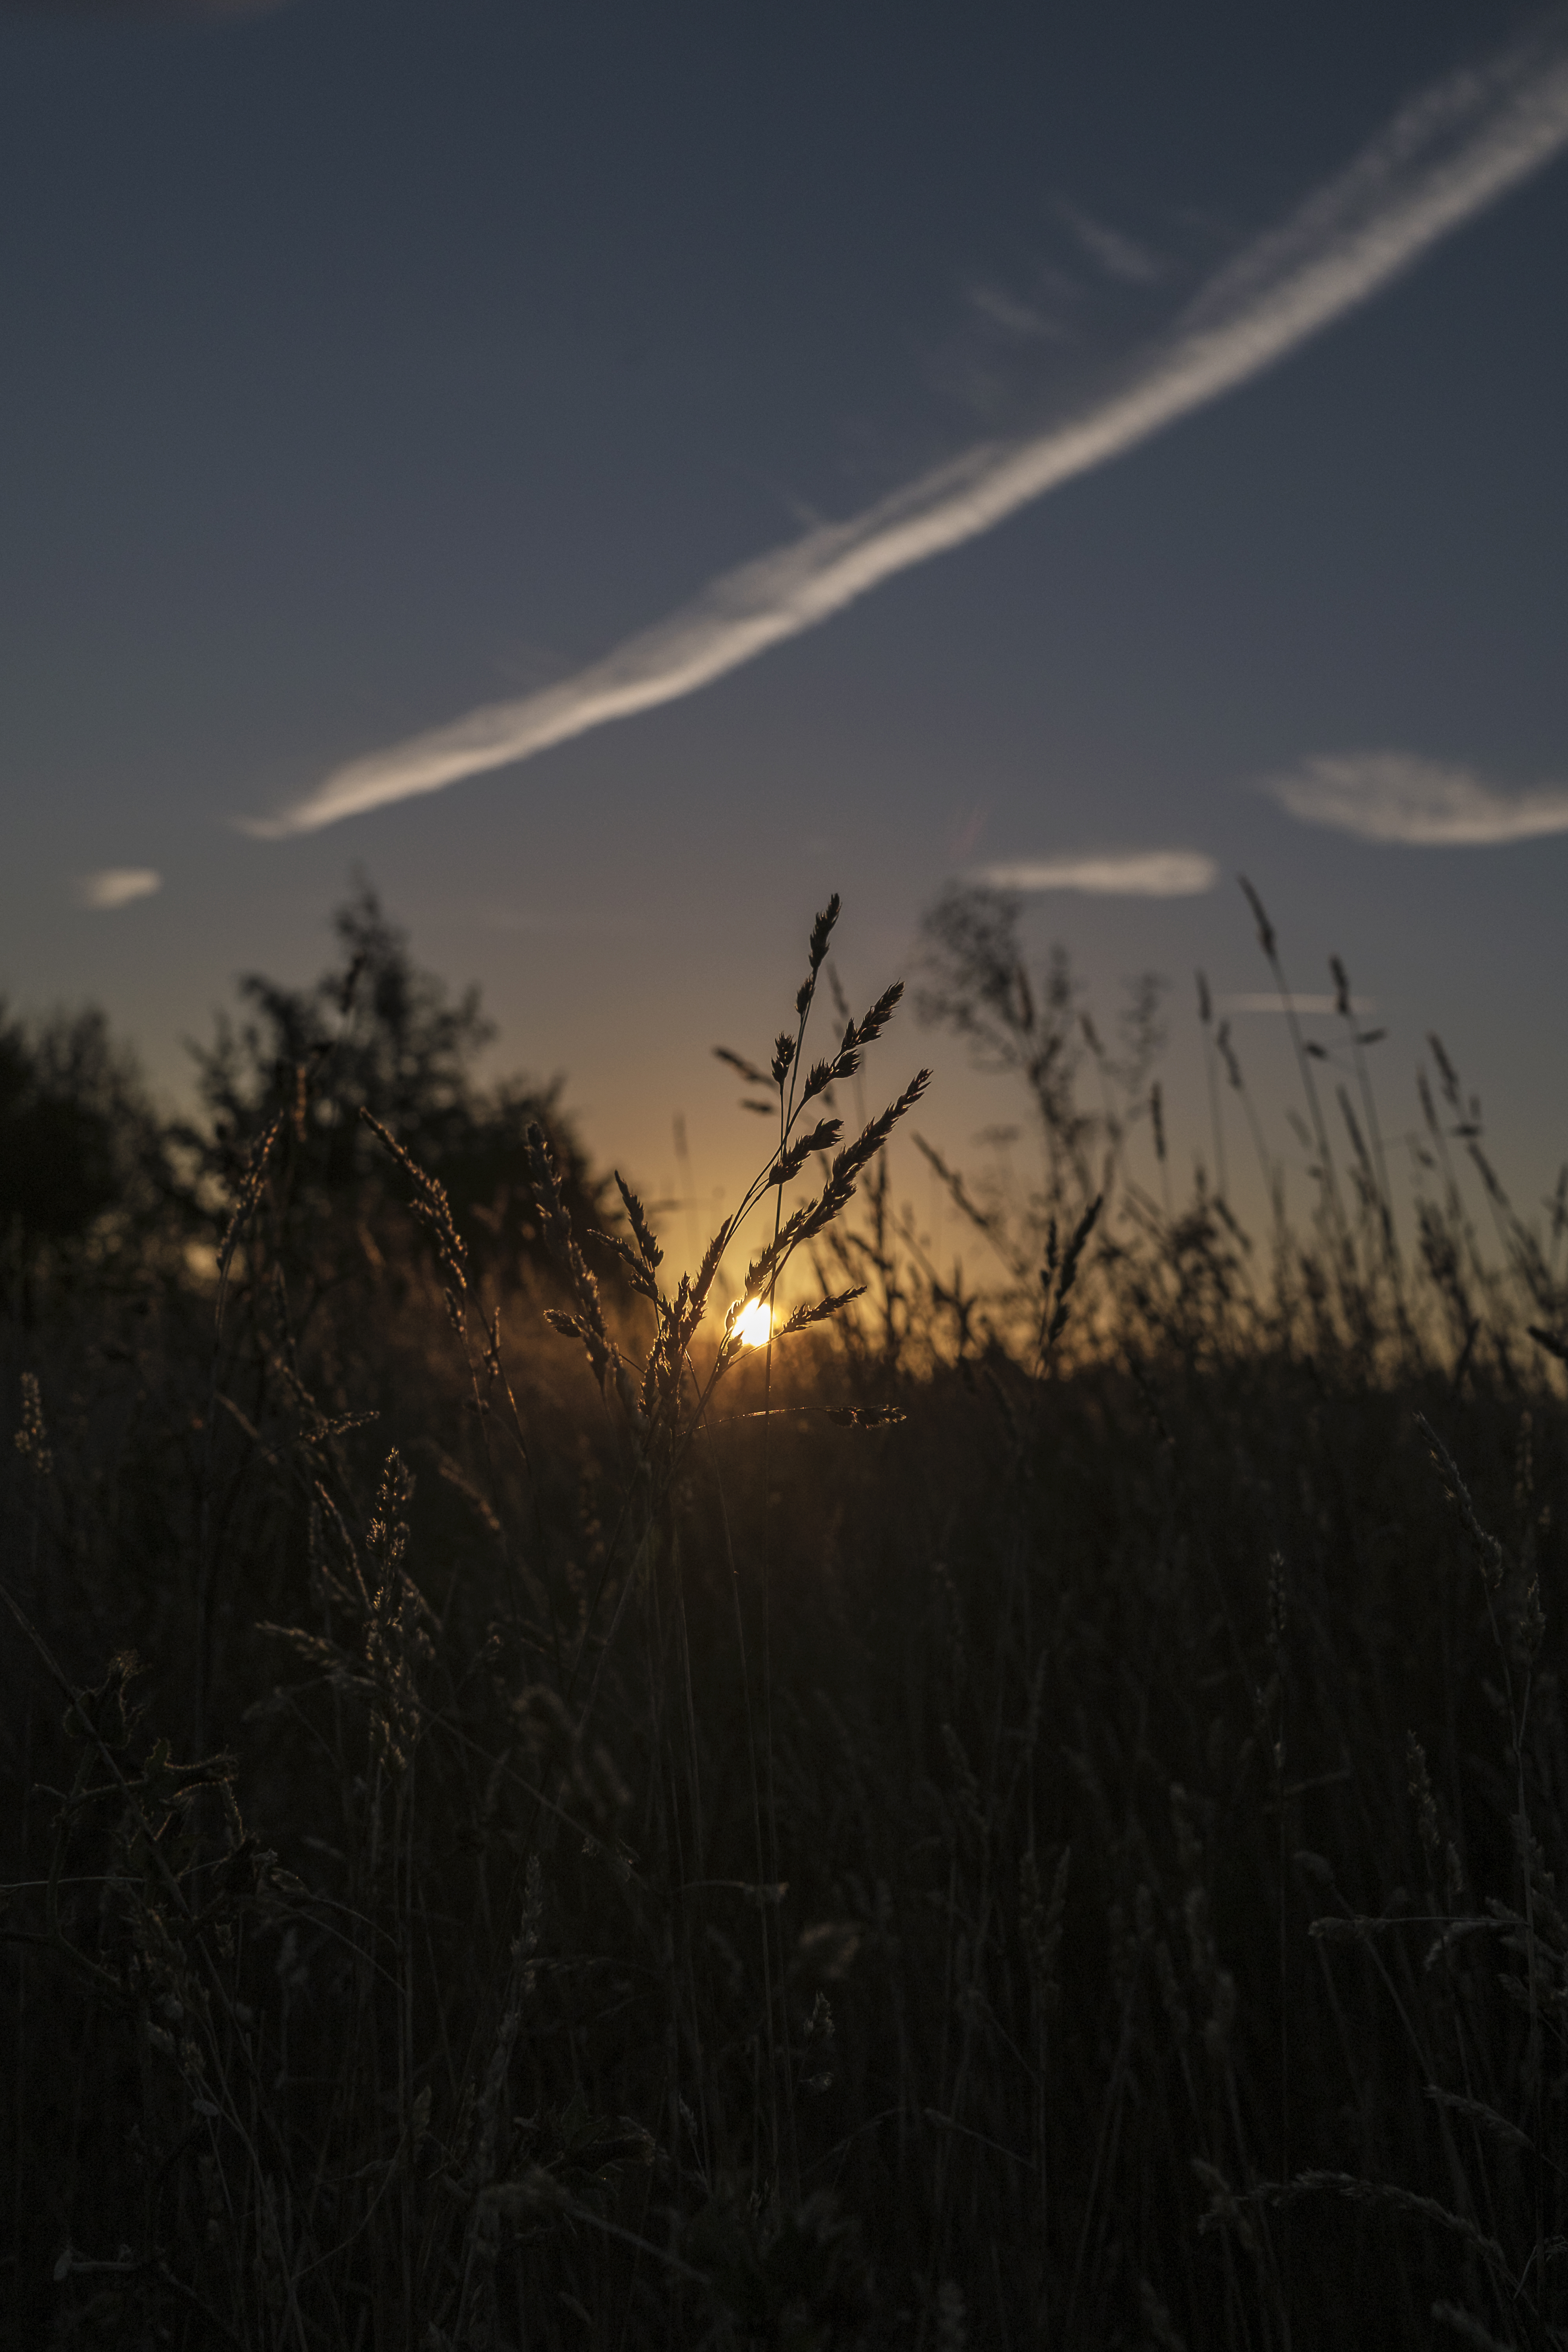 Sunrise through reeds